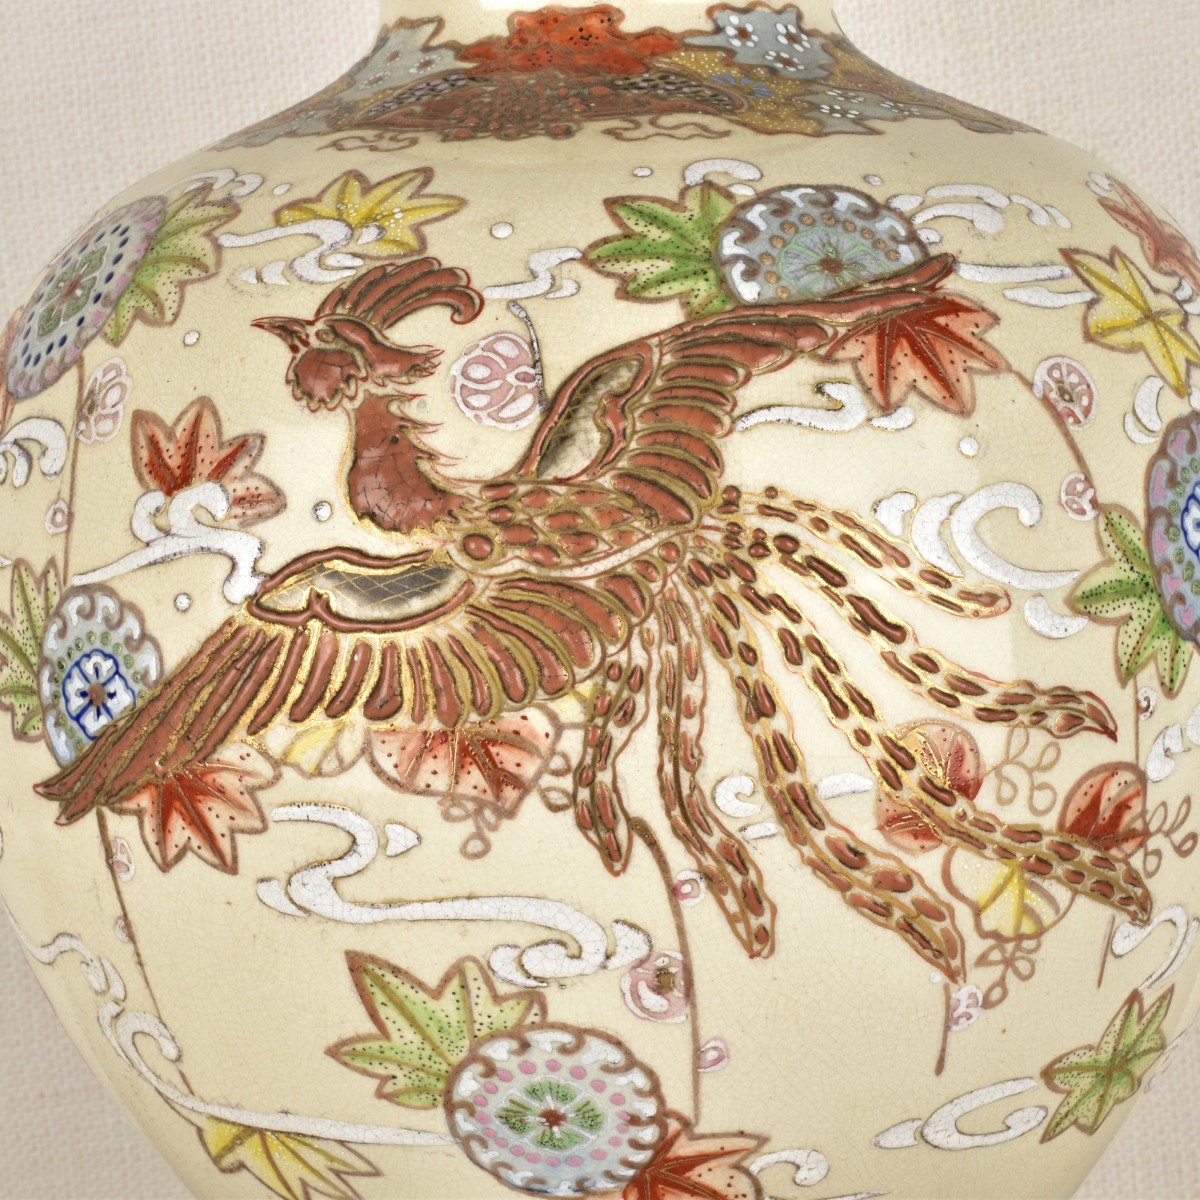 Japanese Pottery Vase